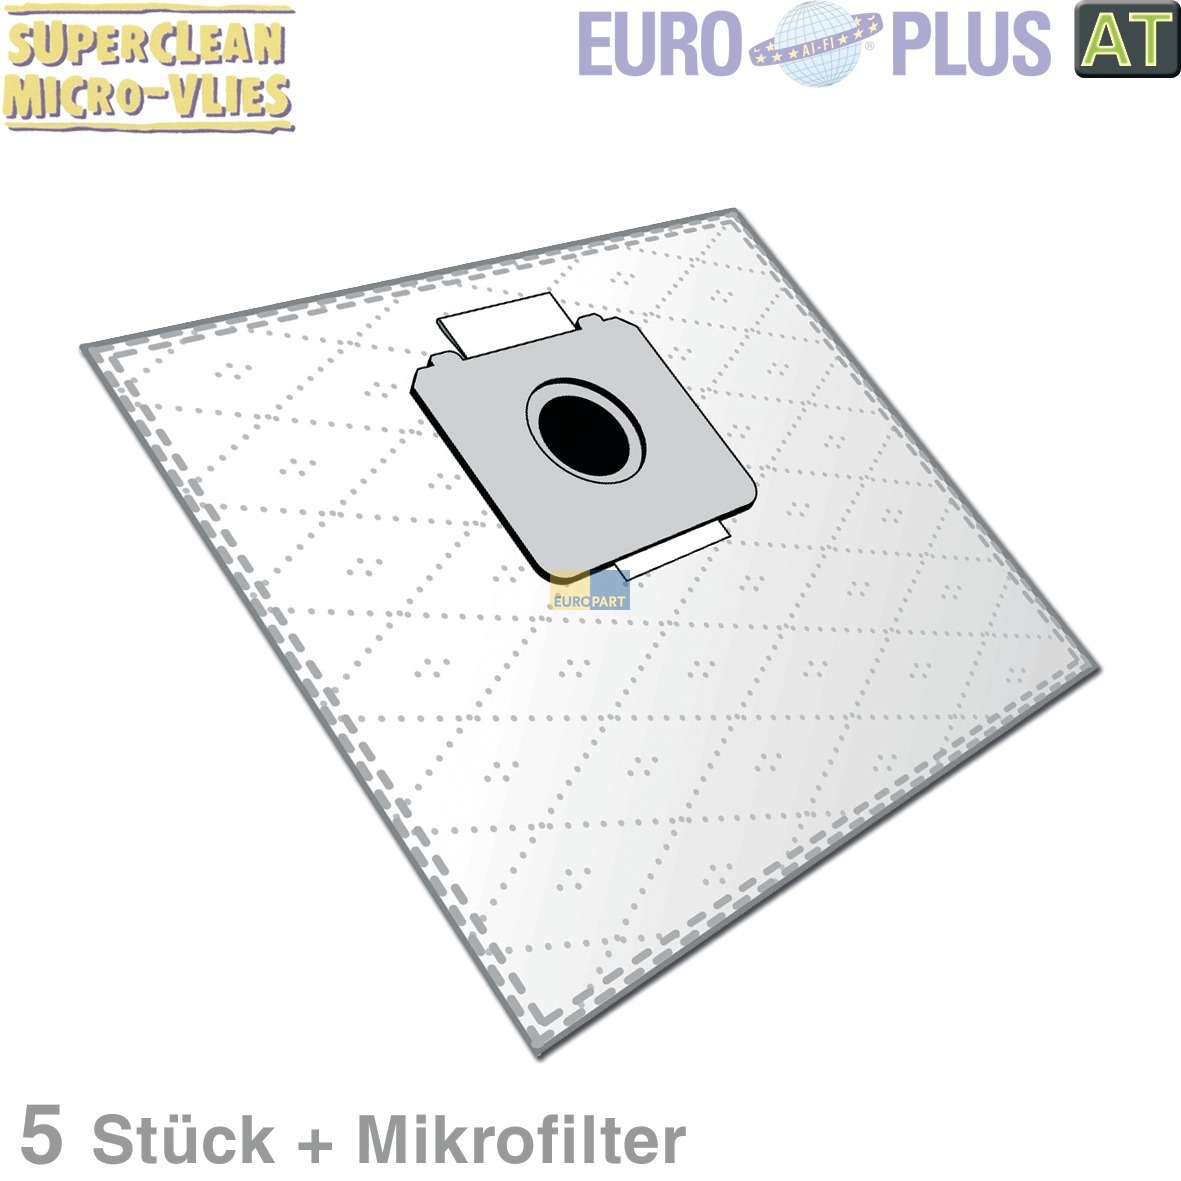 Filterbeutel Vlies Europlus A1016 u-a- wie AEG Gr-28 5Stk (KD-A1016MICROVLIES)